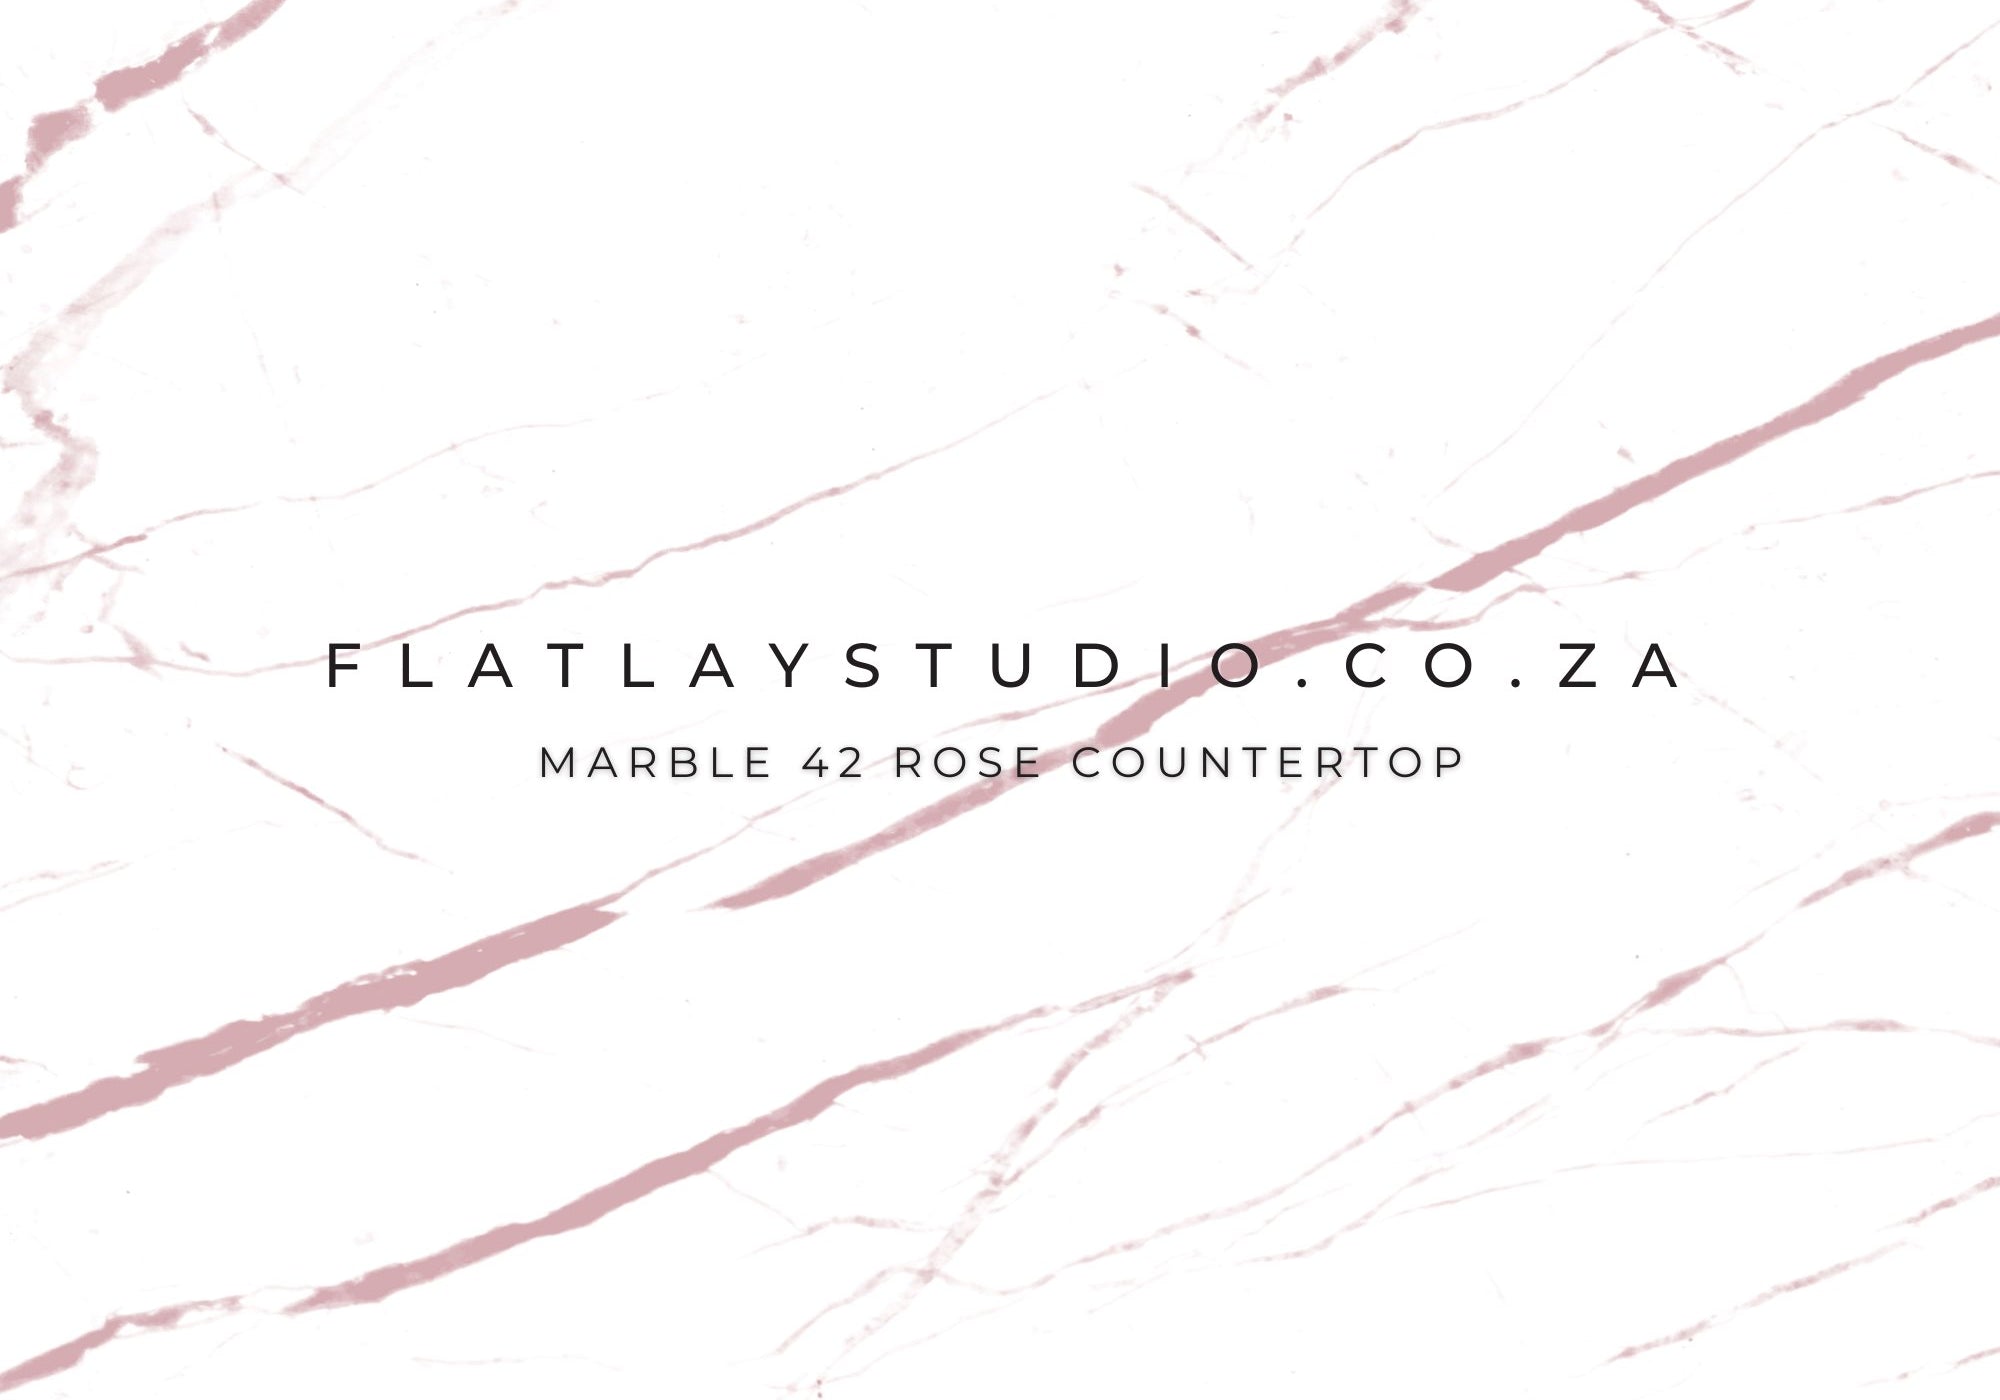 Marble 42 Rose Countertop - FlatlayStudio Flatlay Styling Board